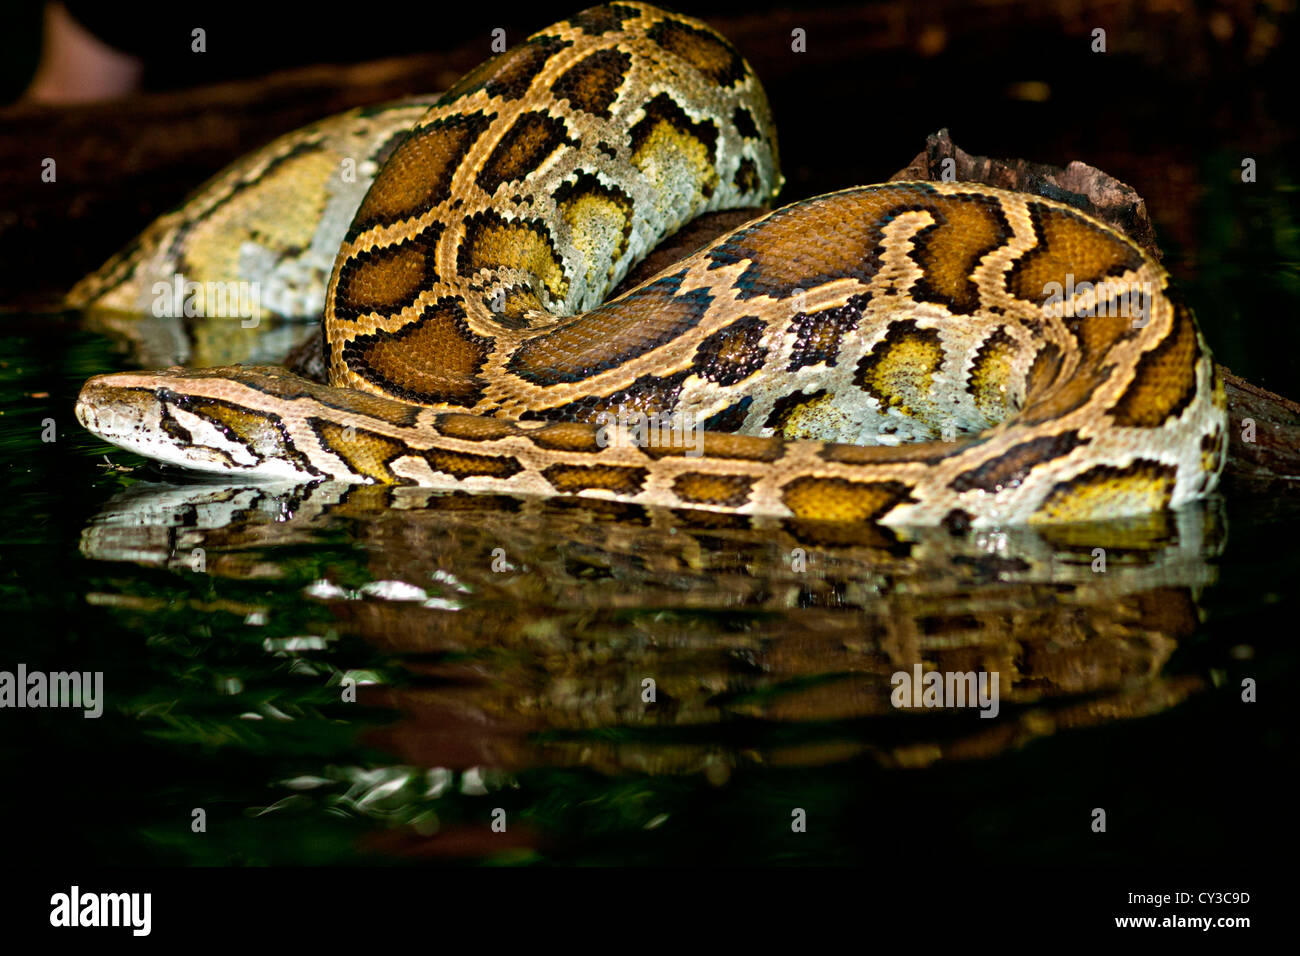 Python molurus bivittatus